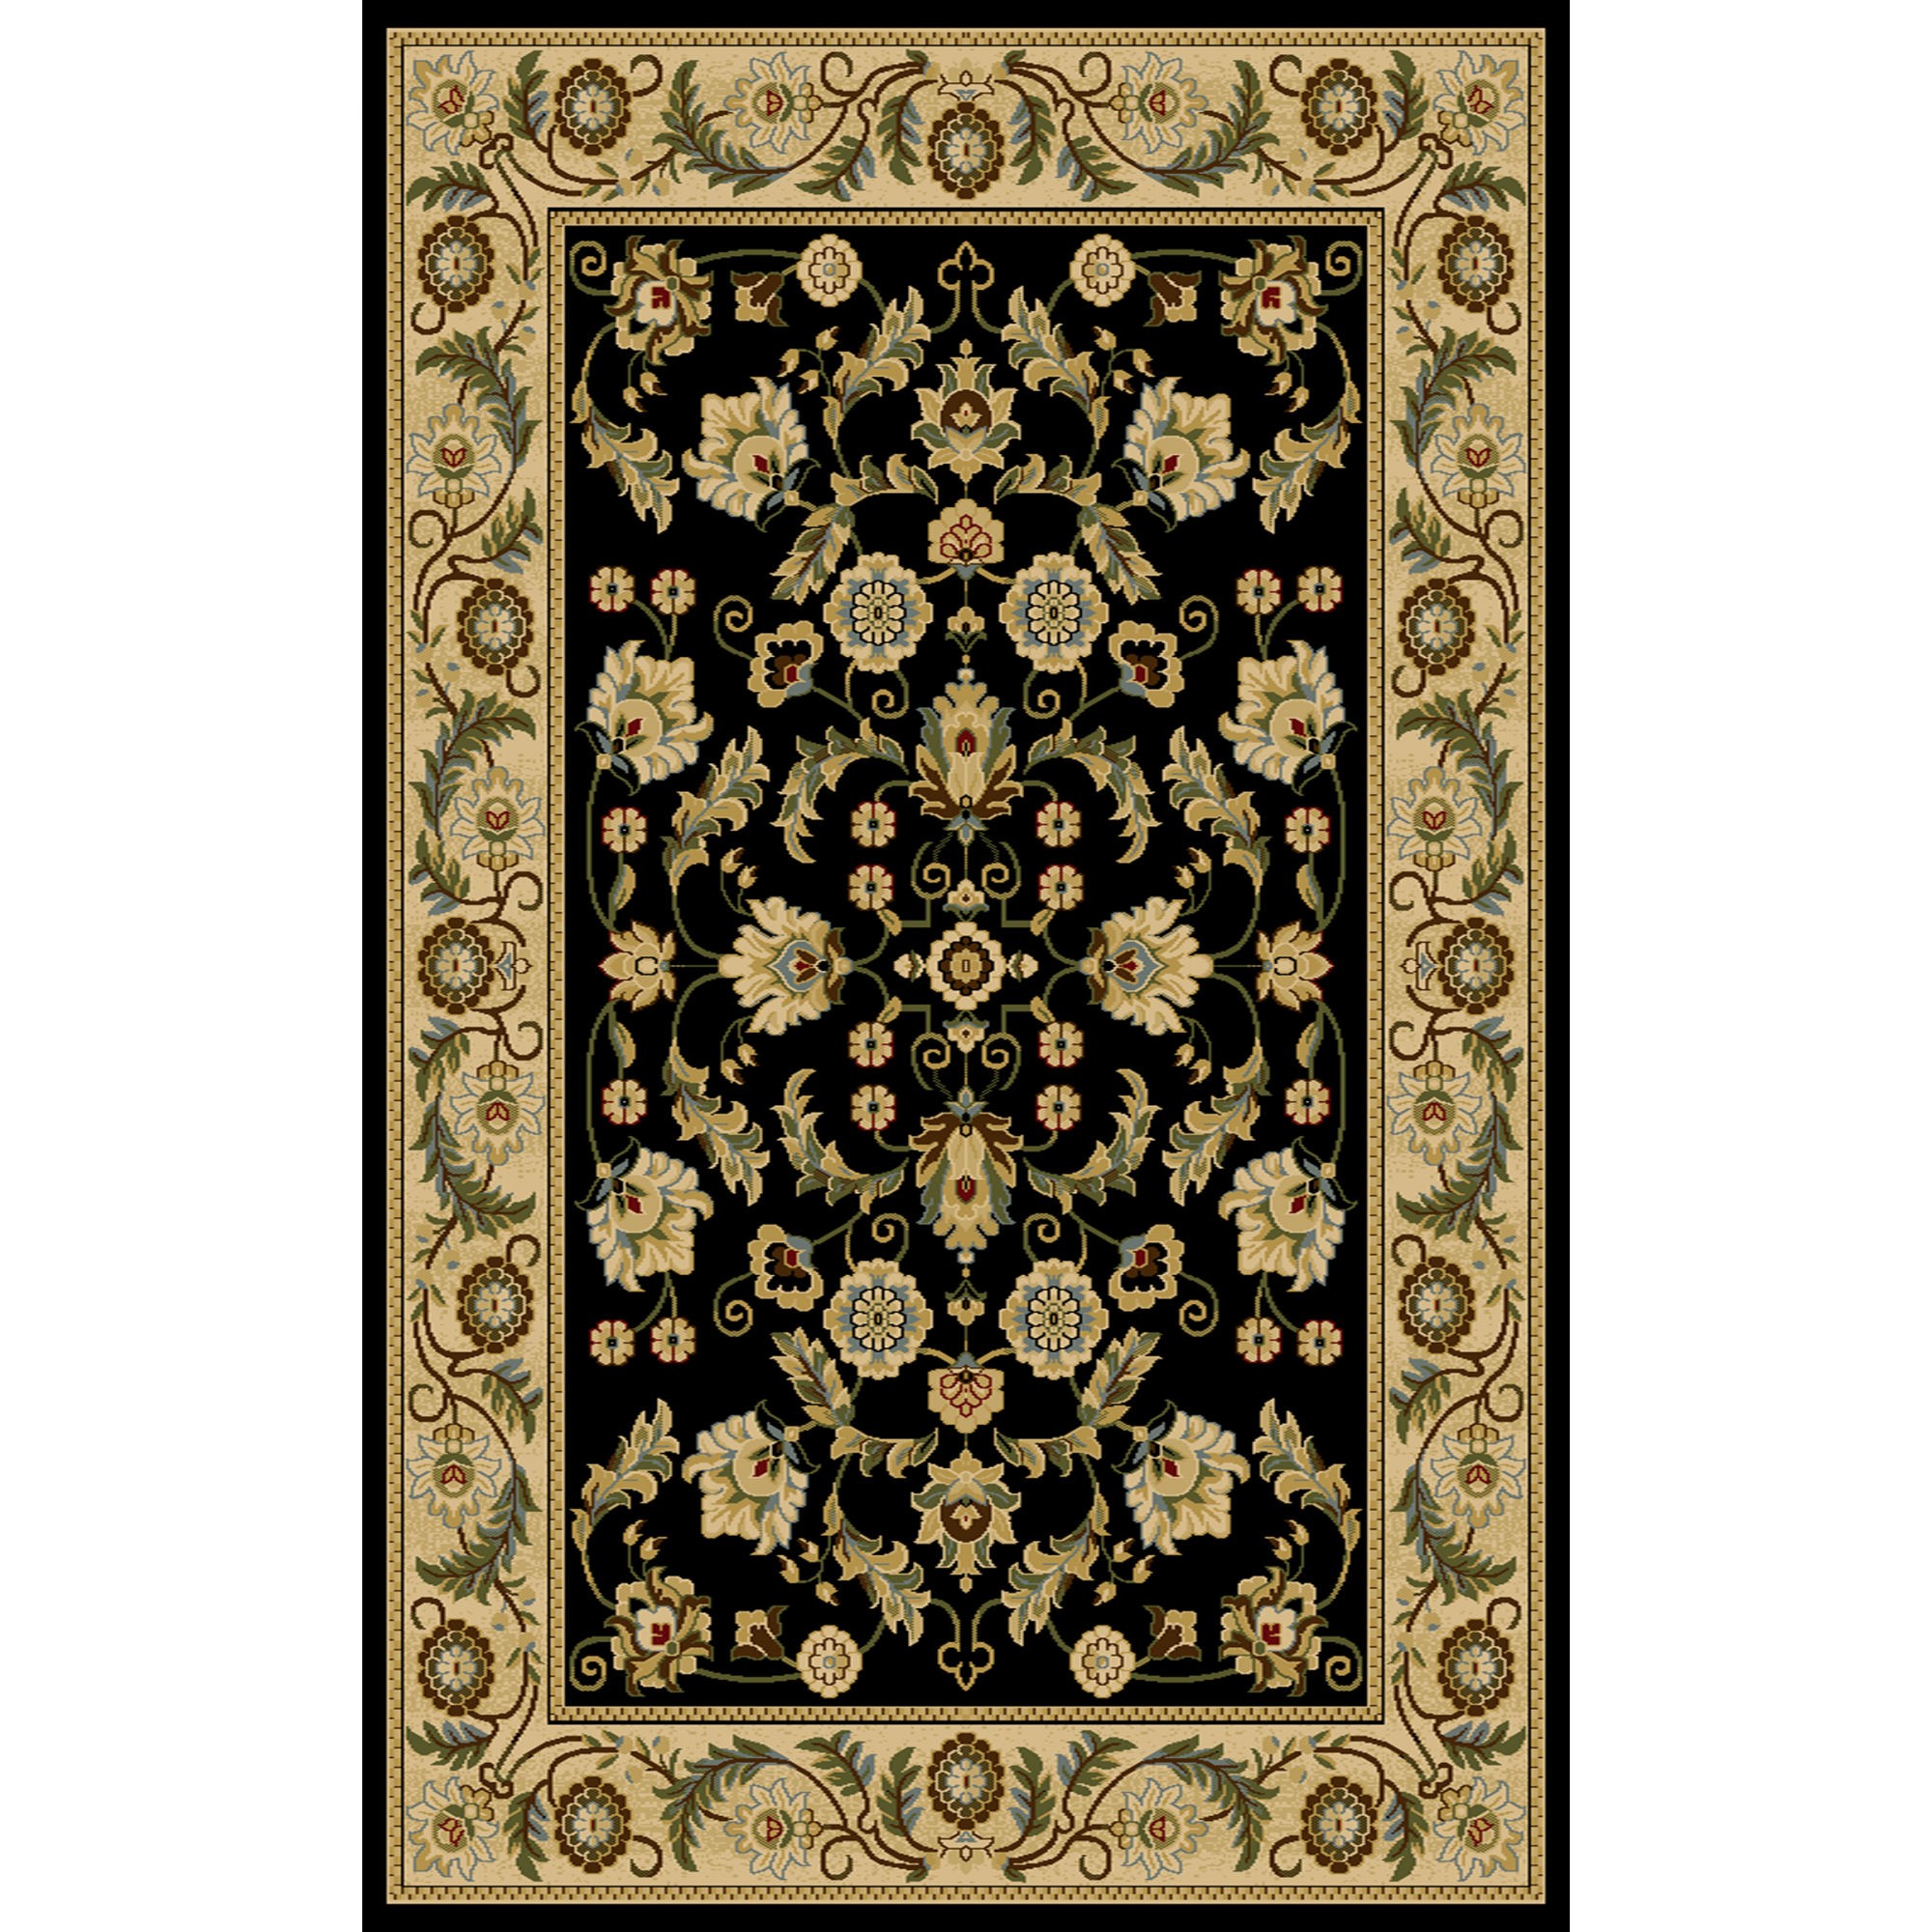 Contemporary Central Oriental Interlude Cambridge Black Oriental Rug - 8805BK central oriental rugs